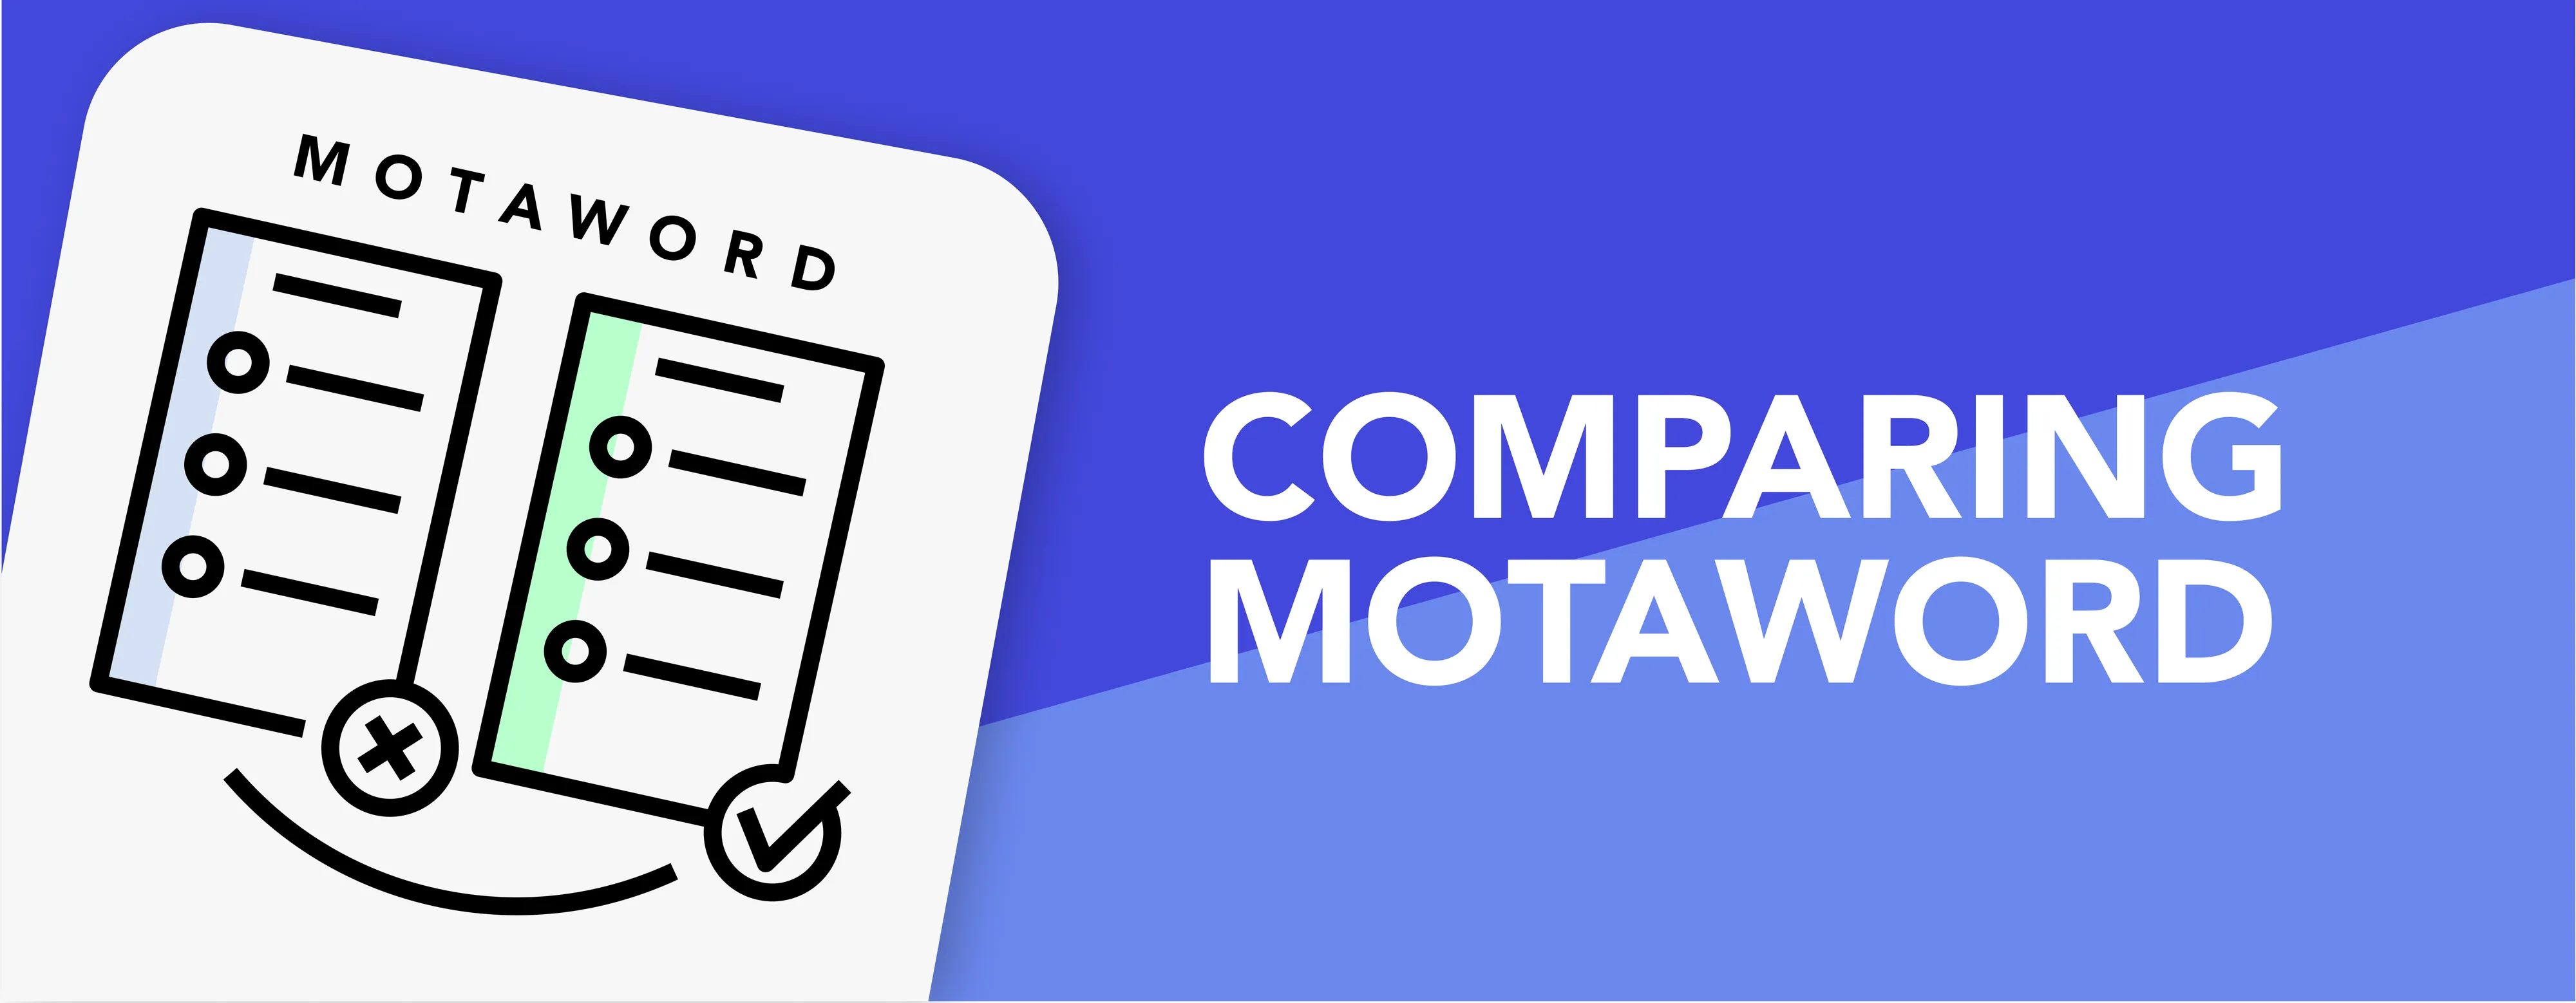 comparing motaword